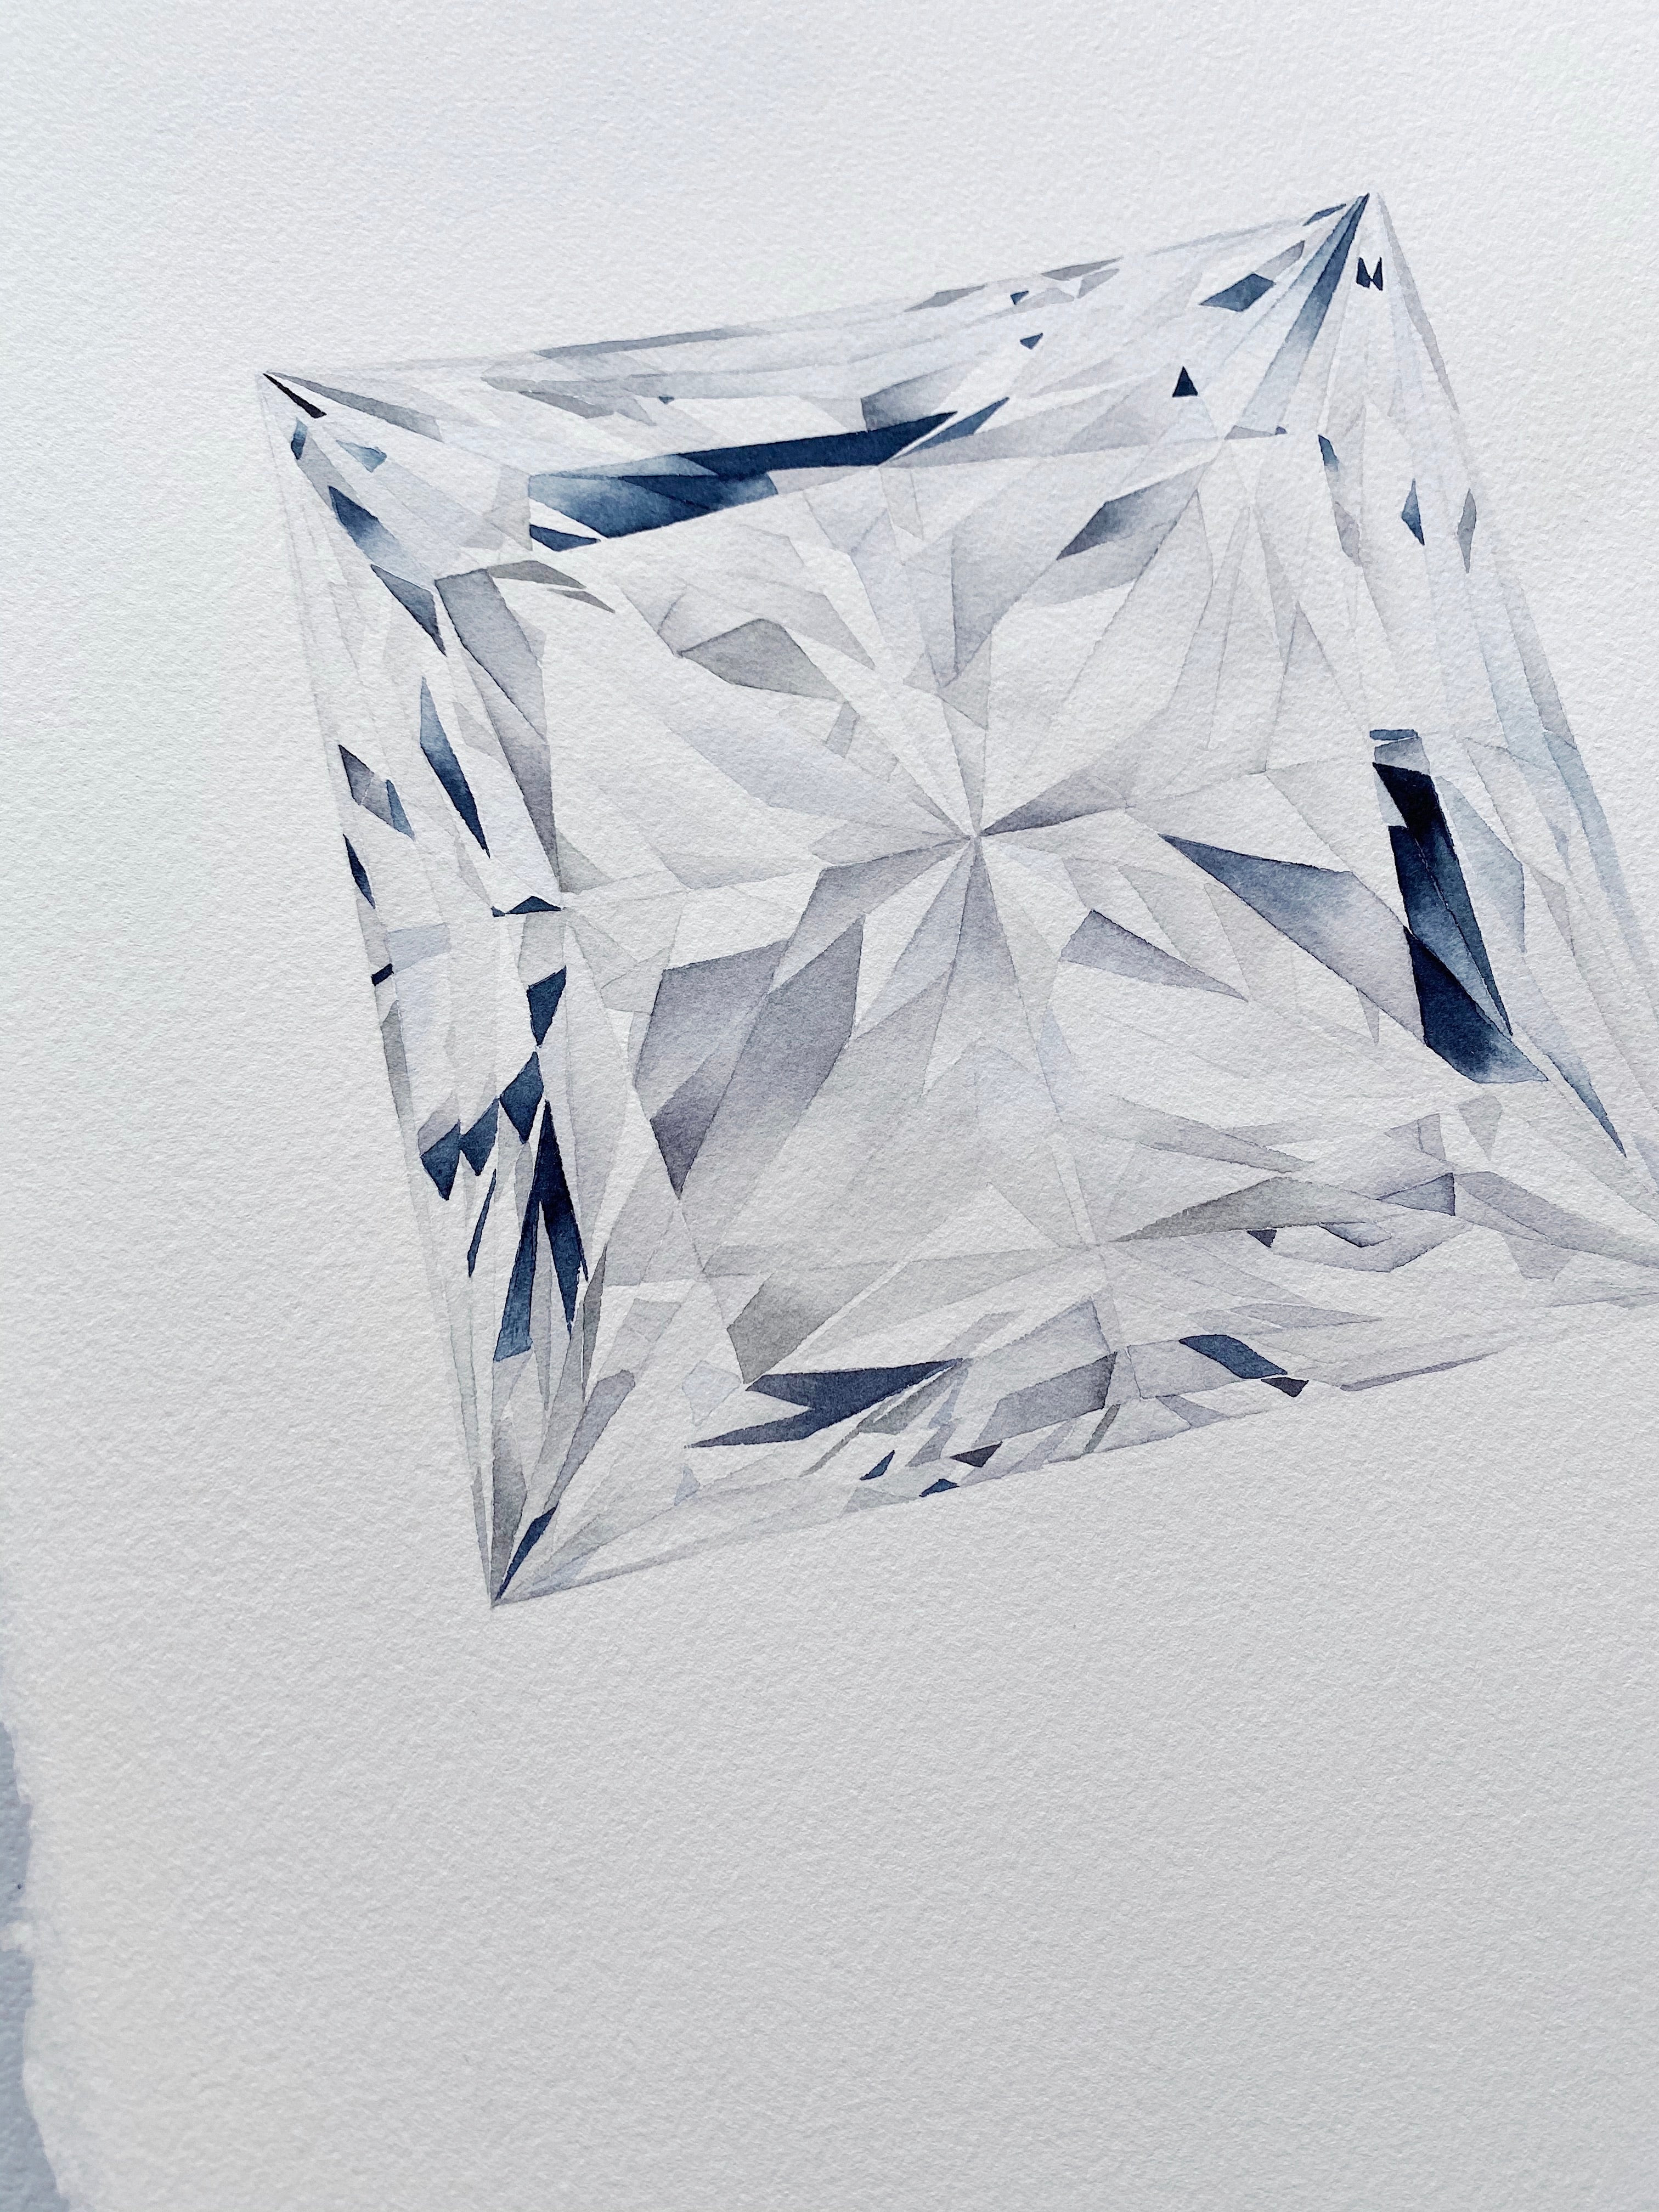 Original Painting - Watercolor Princess Cut Diamond Painting 11x15 inches